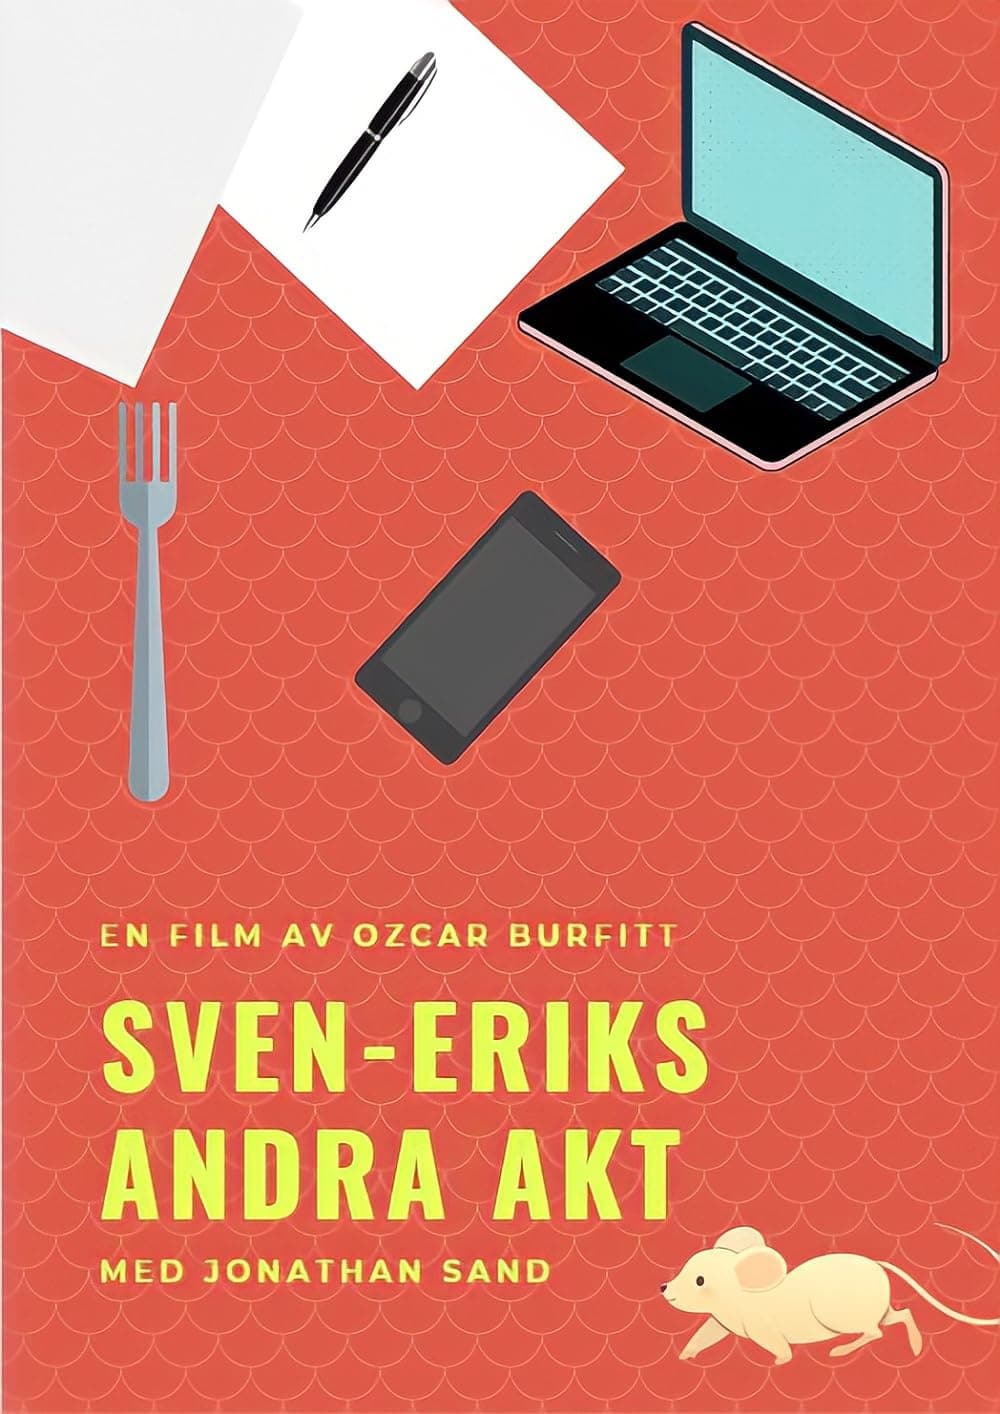 Sven-Erik's Second Act